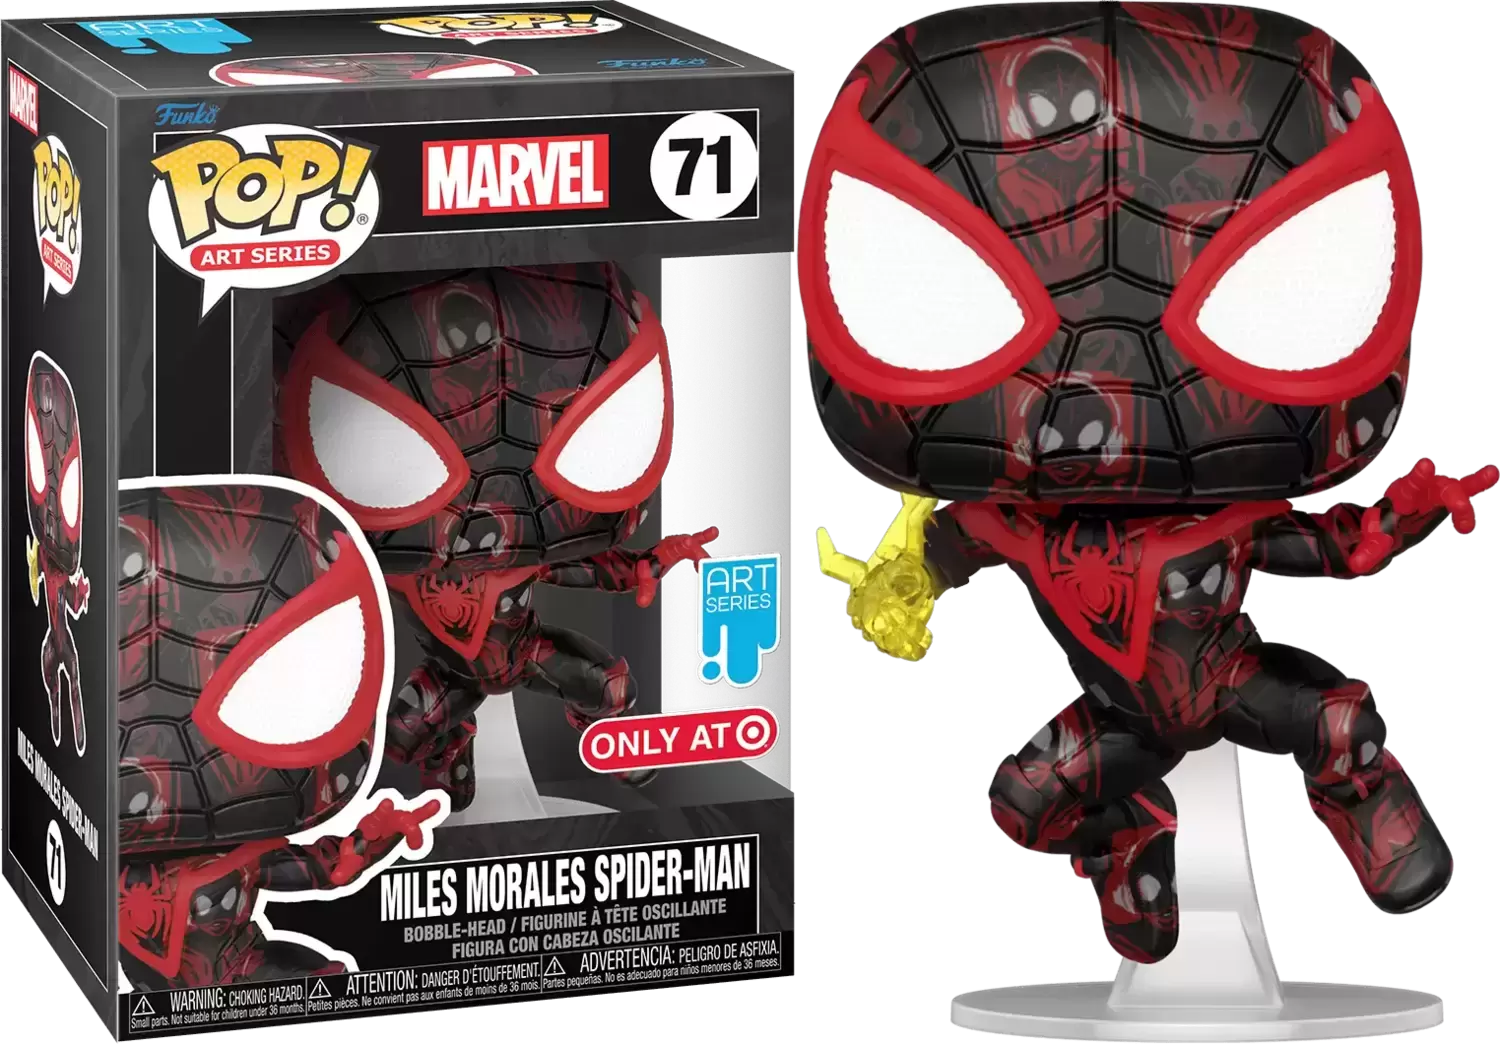 POP! Art Series - Marvel - Miles Morales Spider-Man